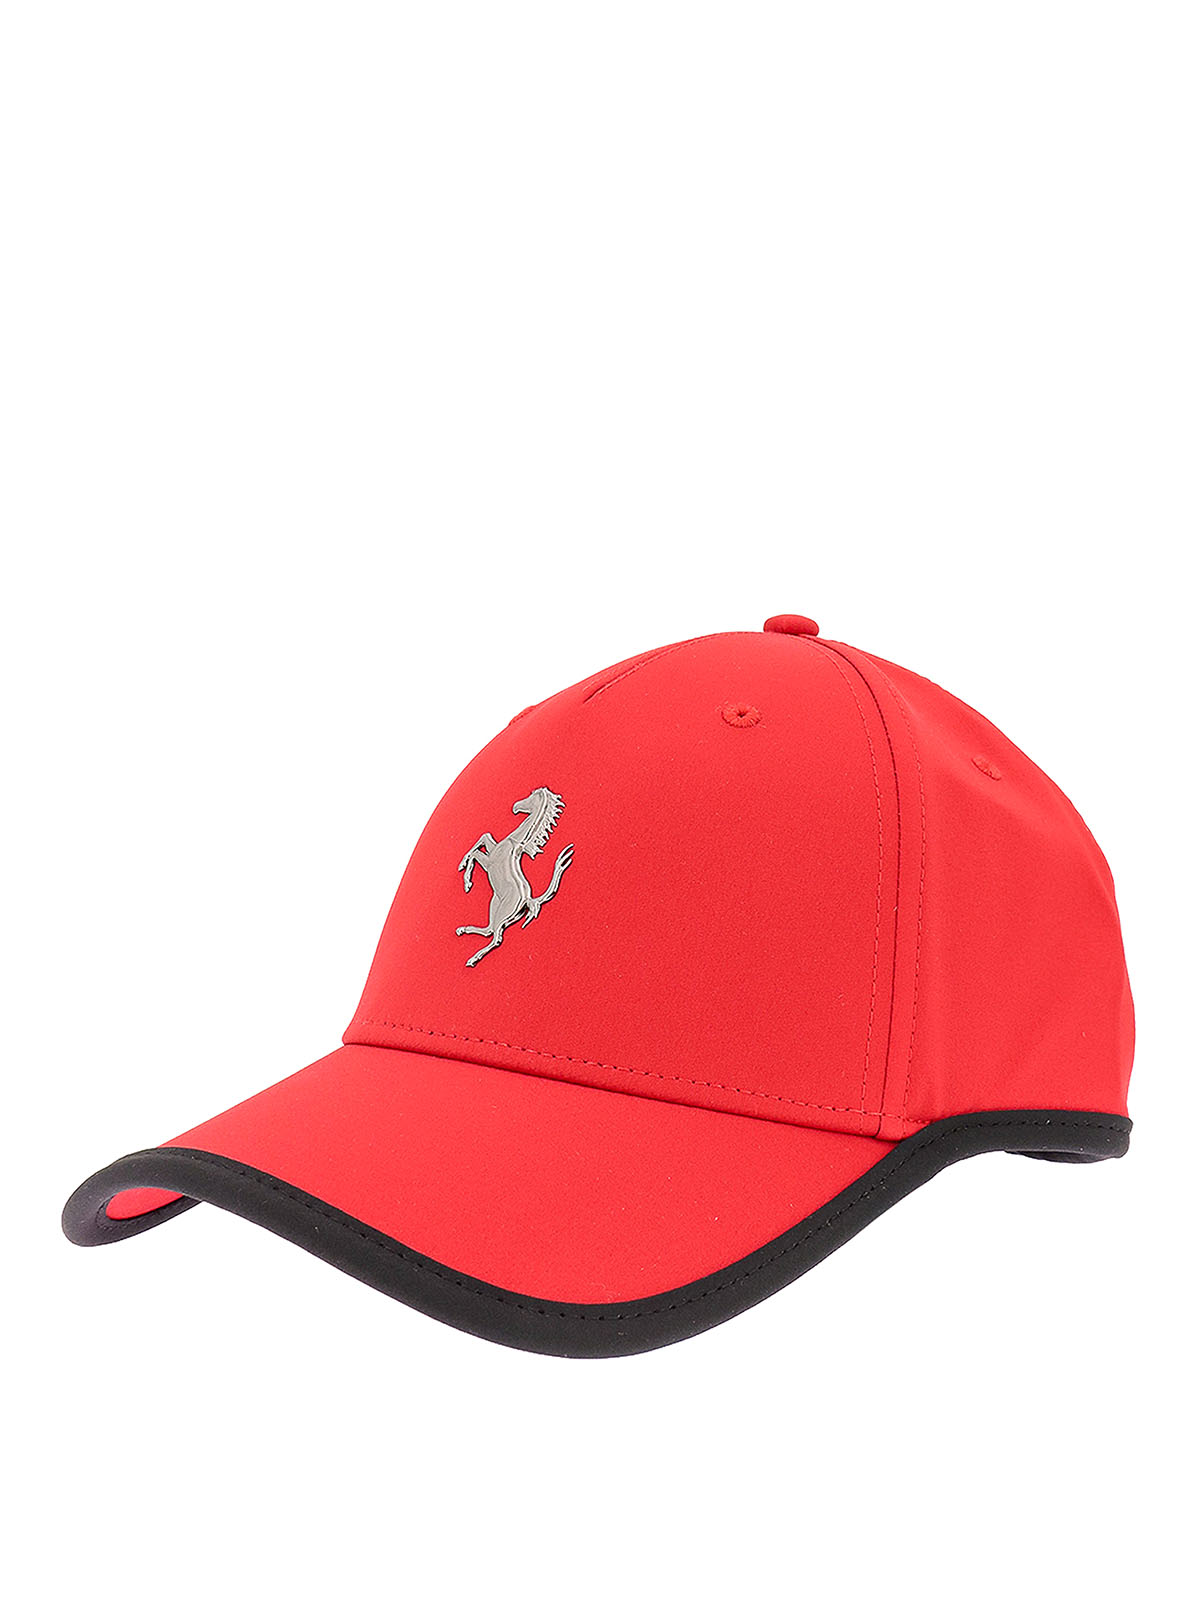 Hats and caps Ferrari - Nylon hat